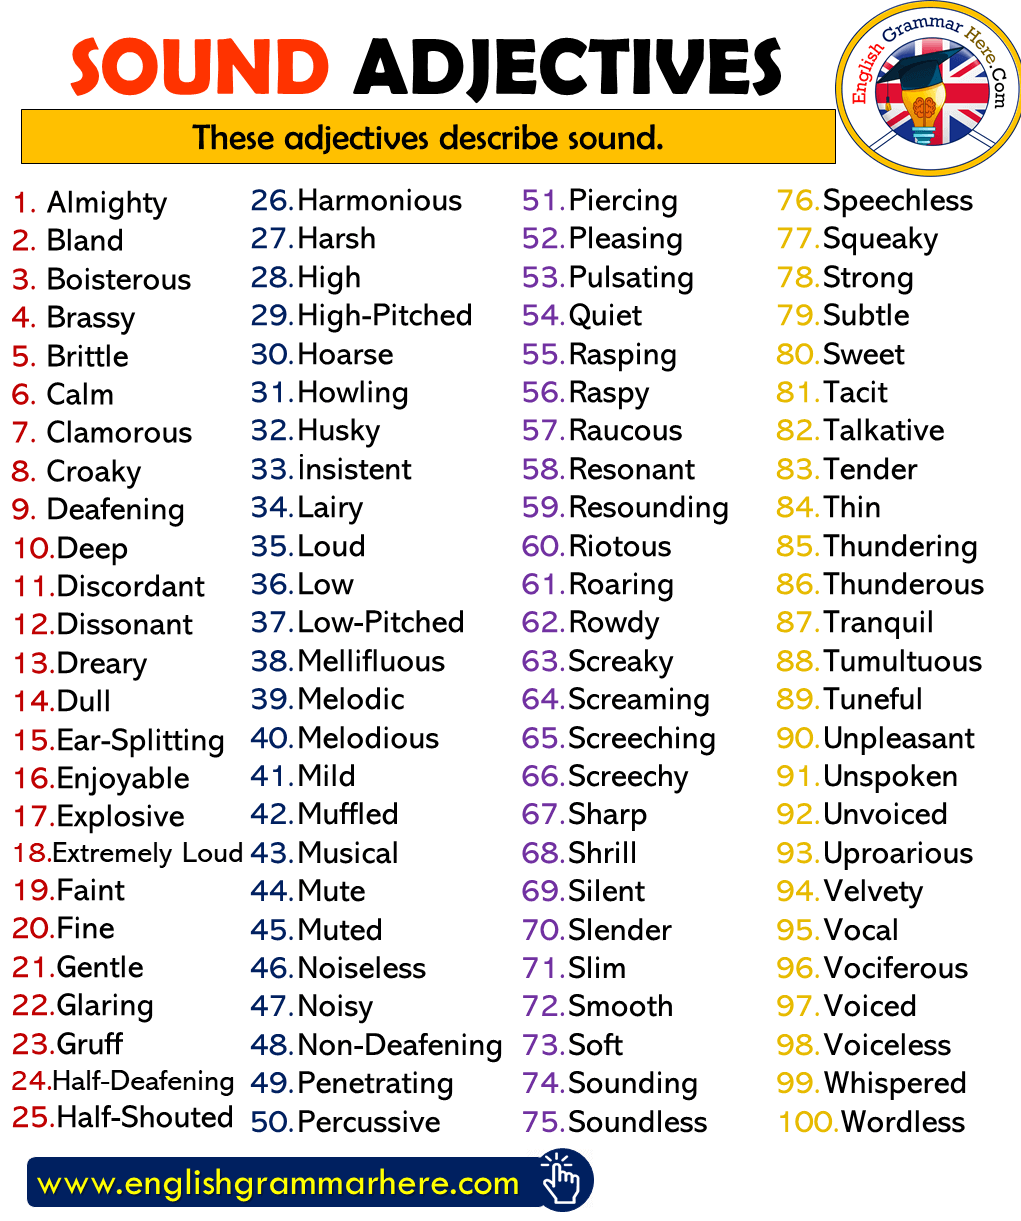 Sound Adjectives List in English - English Grammar Here